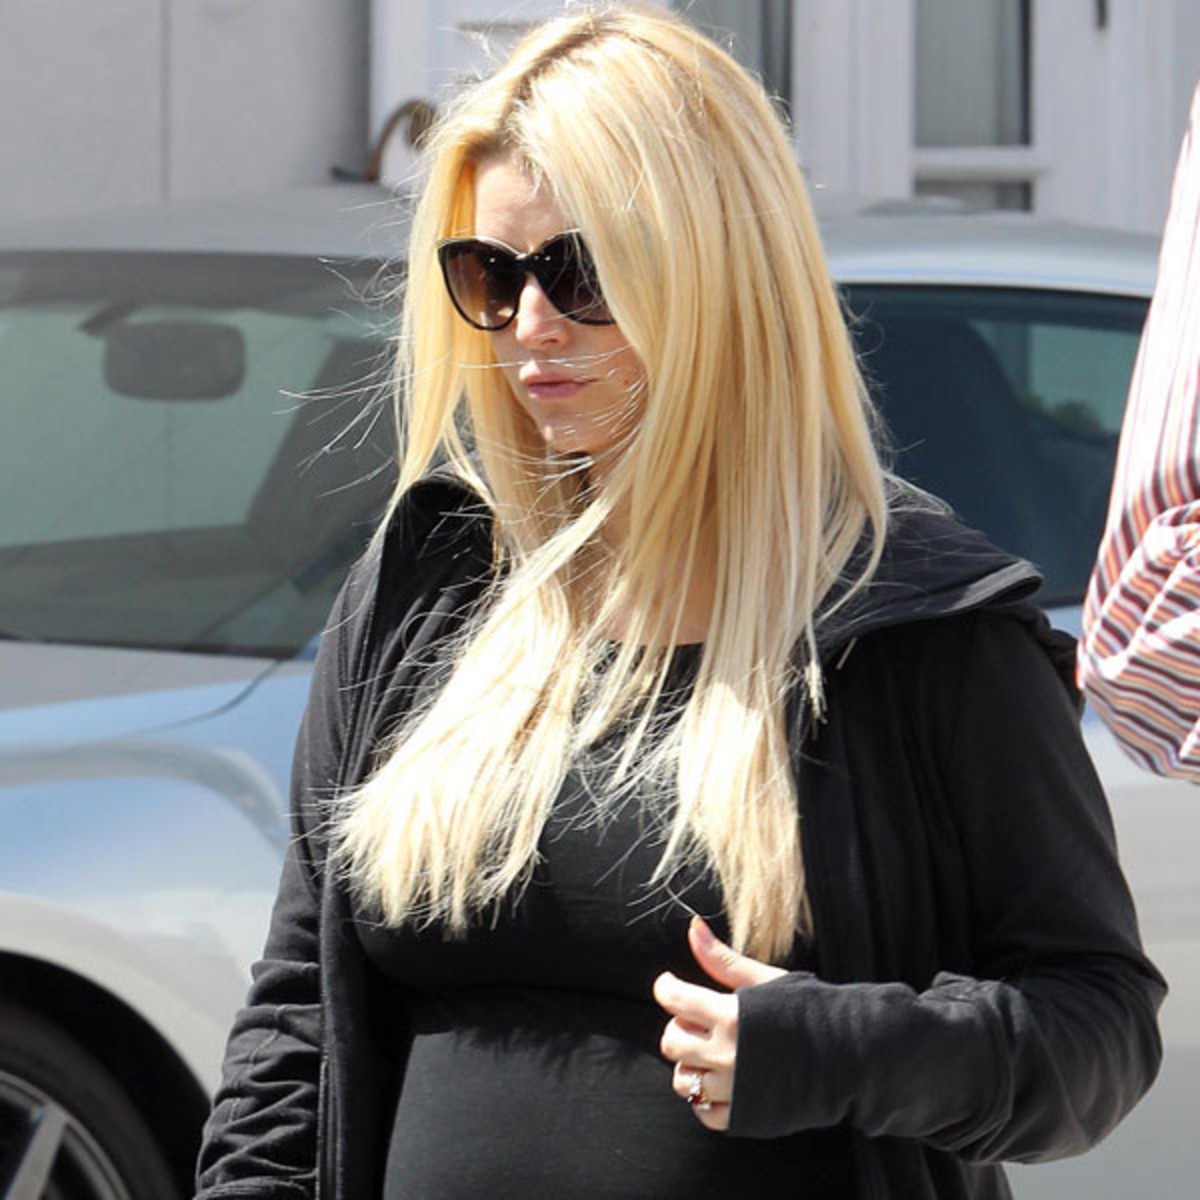 Jessica Simpson cradles large baby bump as she runs errands in  figure-hugging black top and leggings